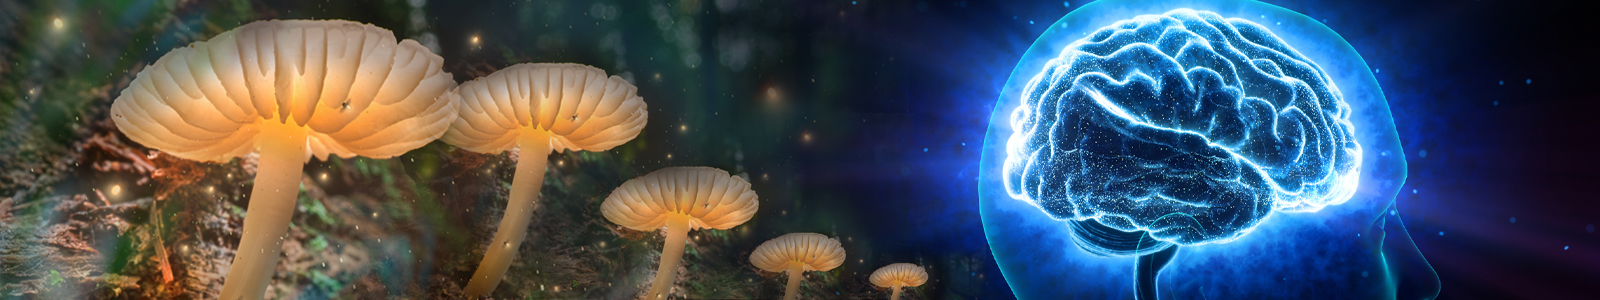 Glowing mushrooms release psilocybin to a brain